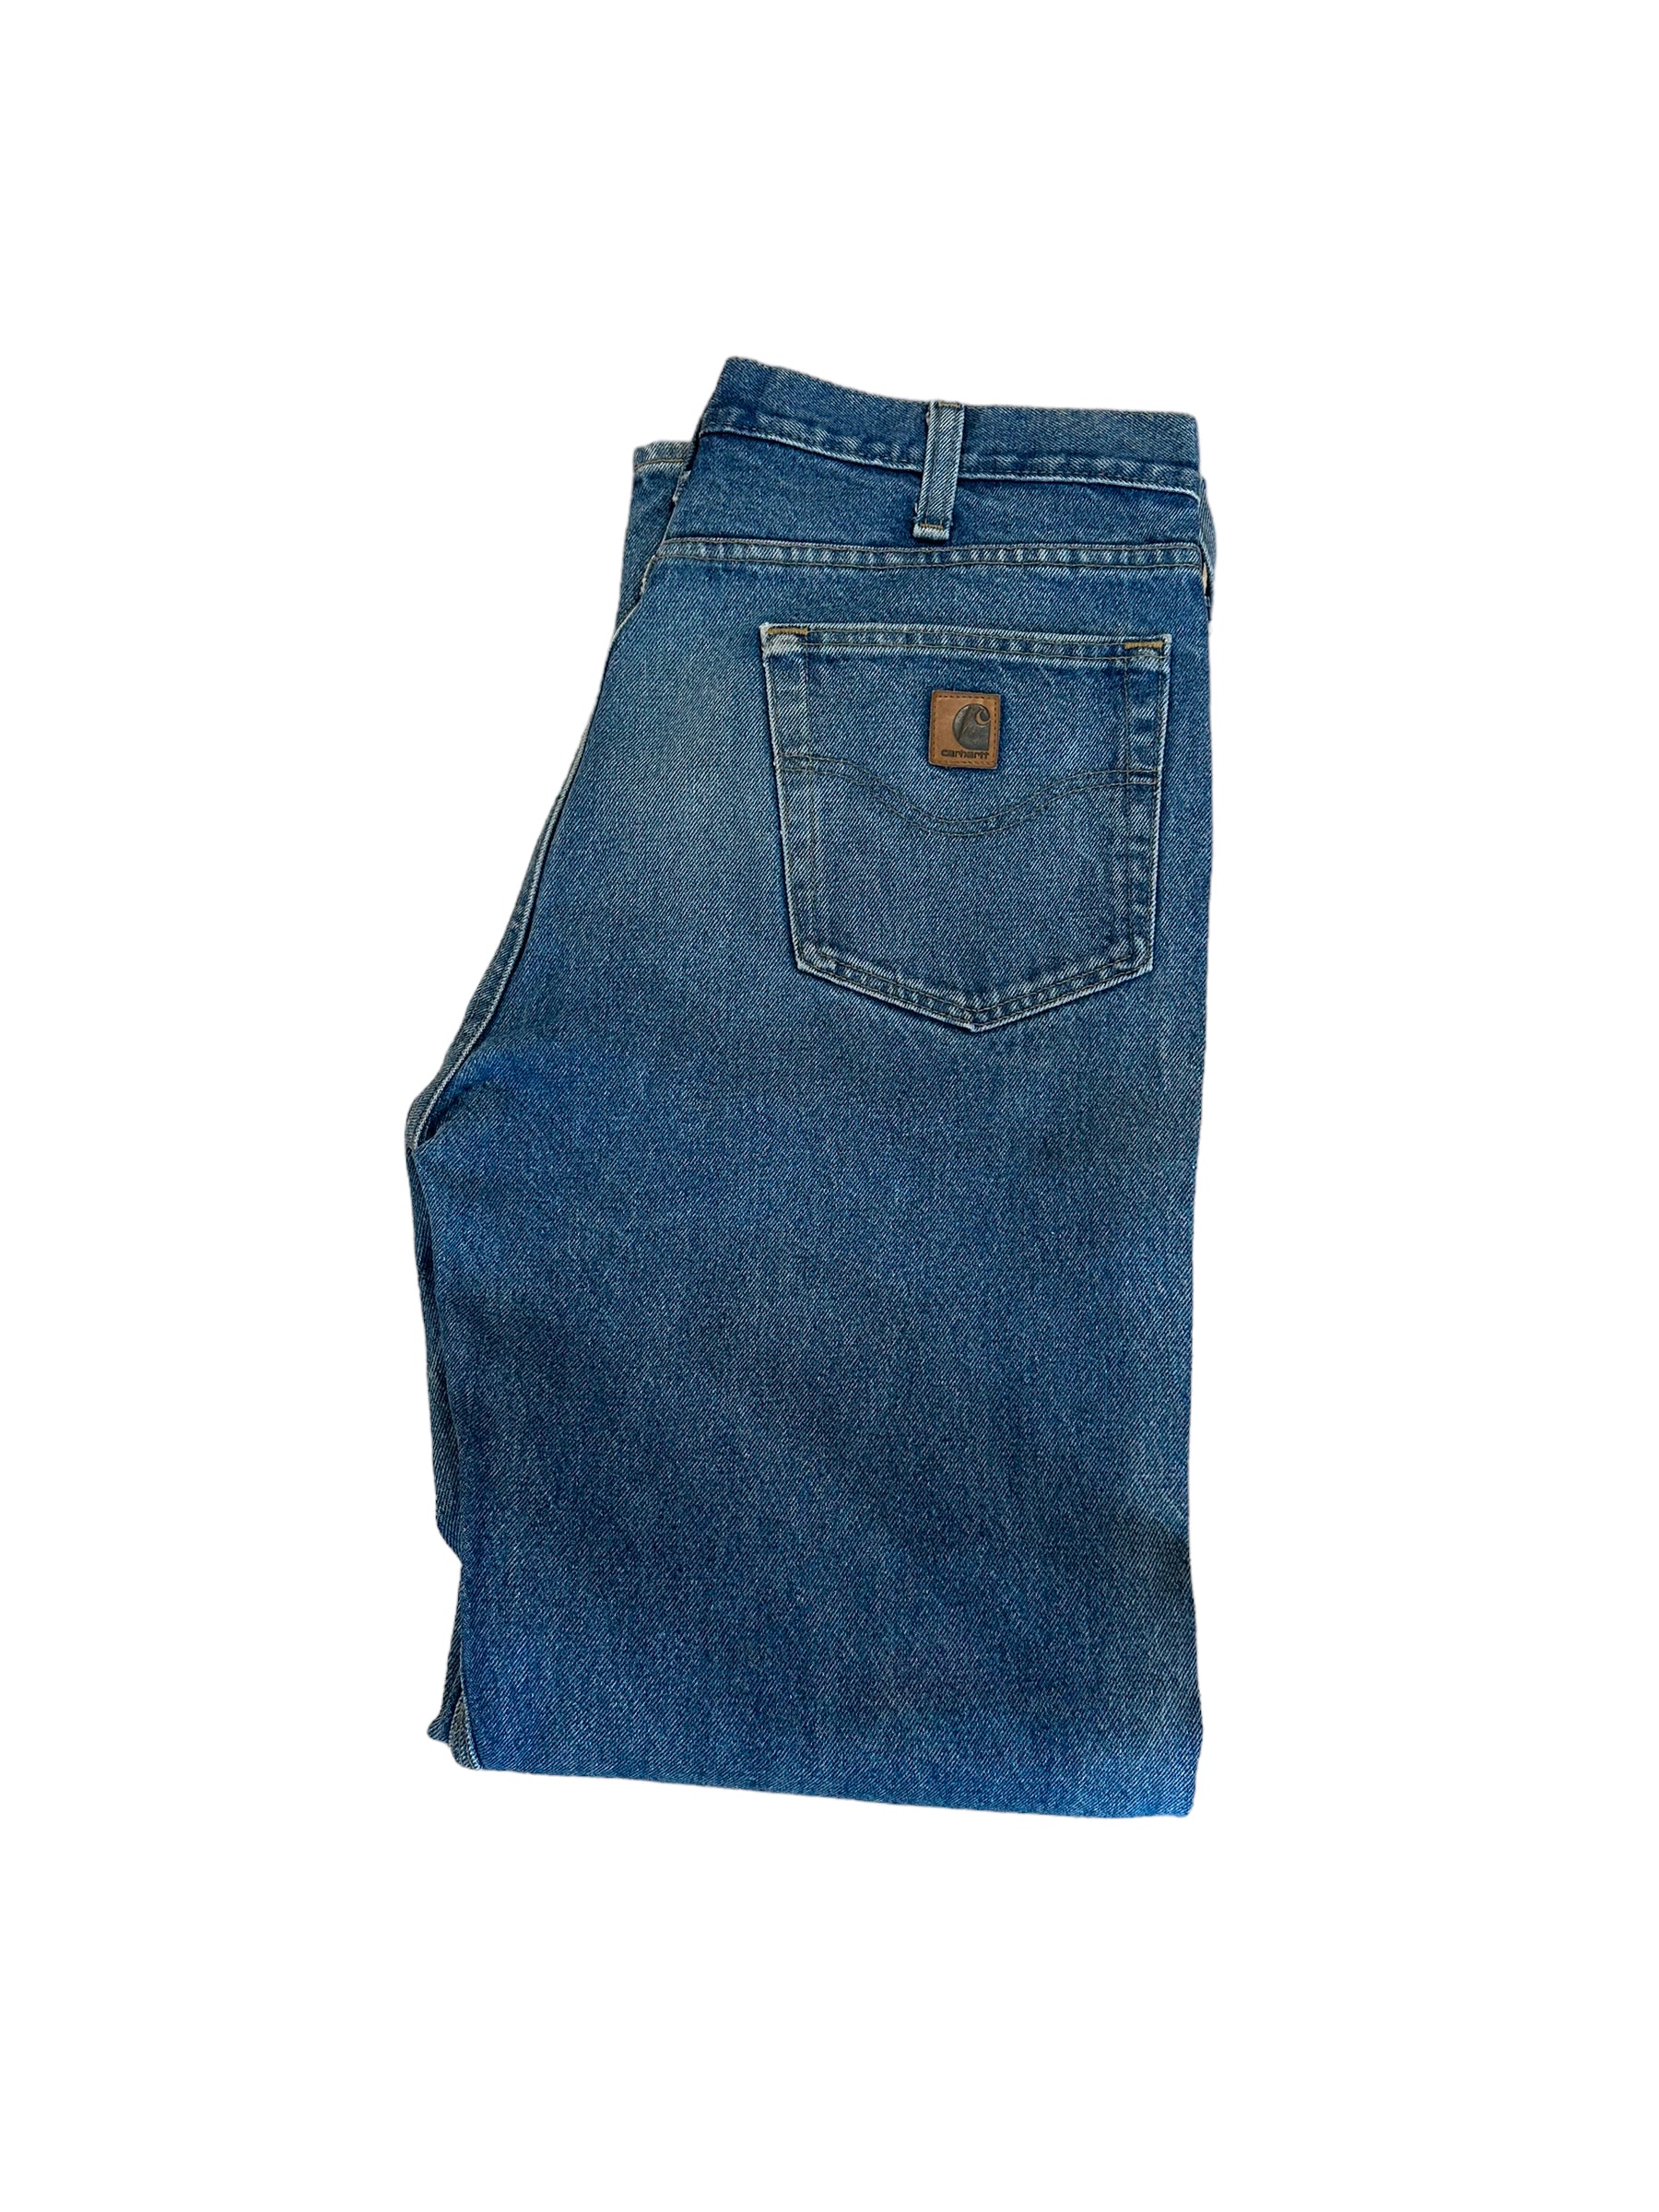 Vintage Carhartt jeans 36/34